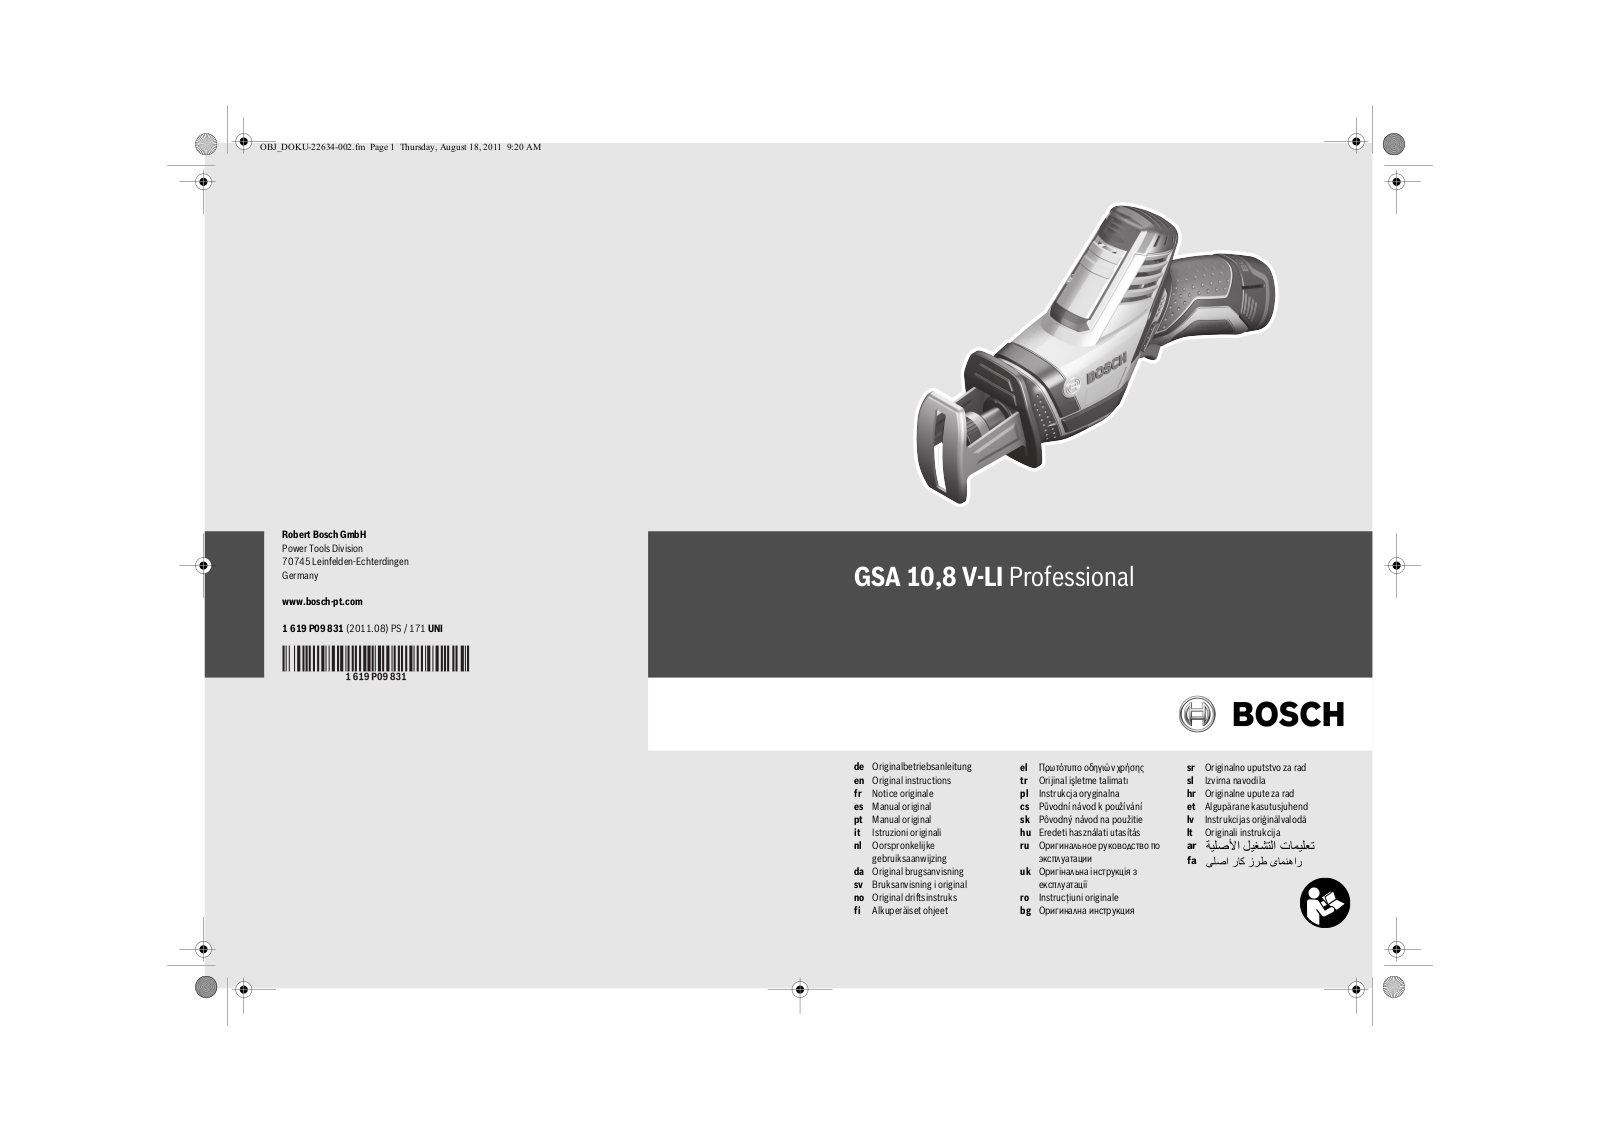 Bosch GSA 10.8 V-LI Professional User guide